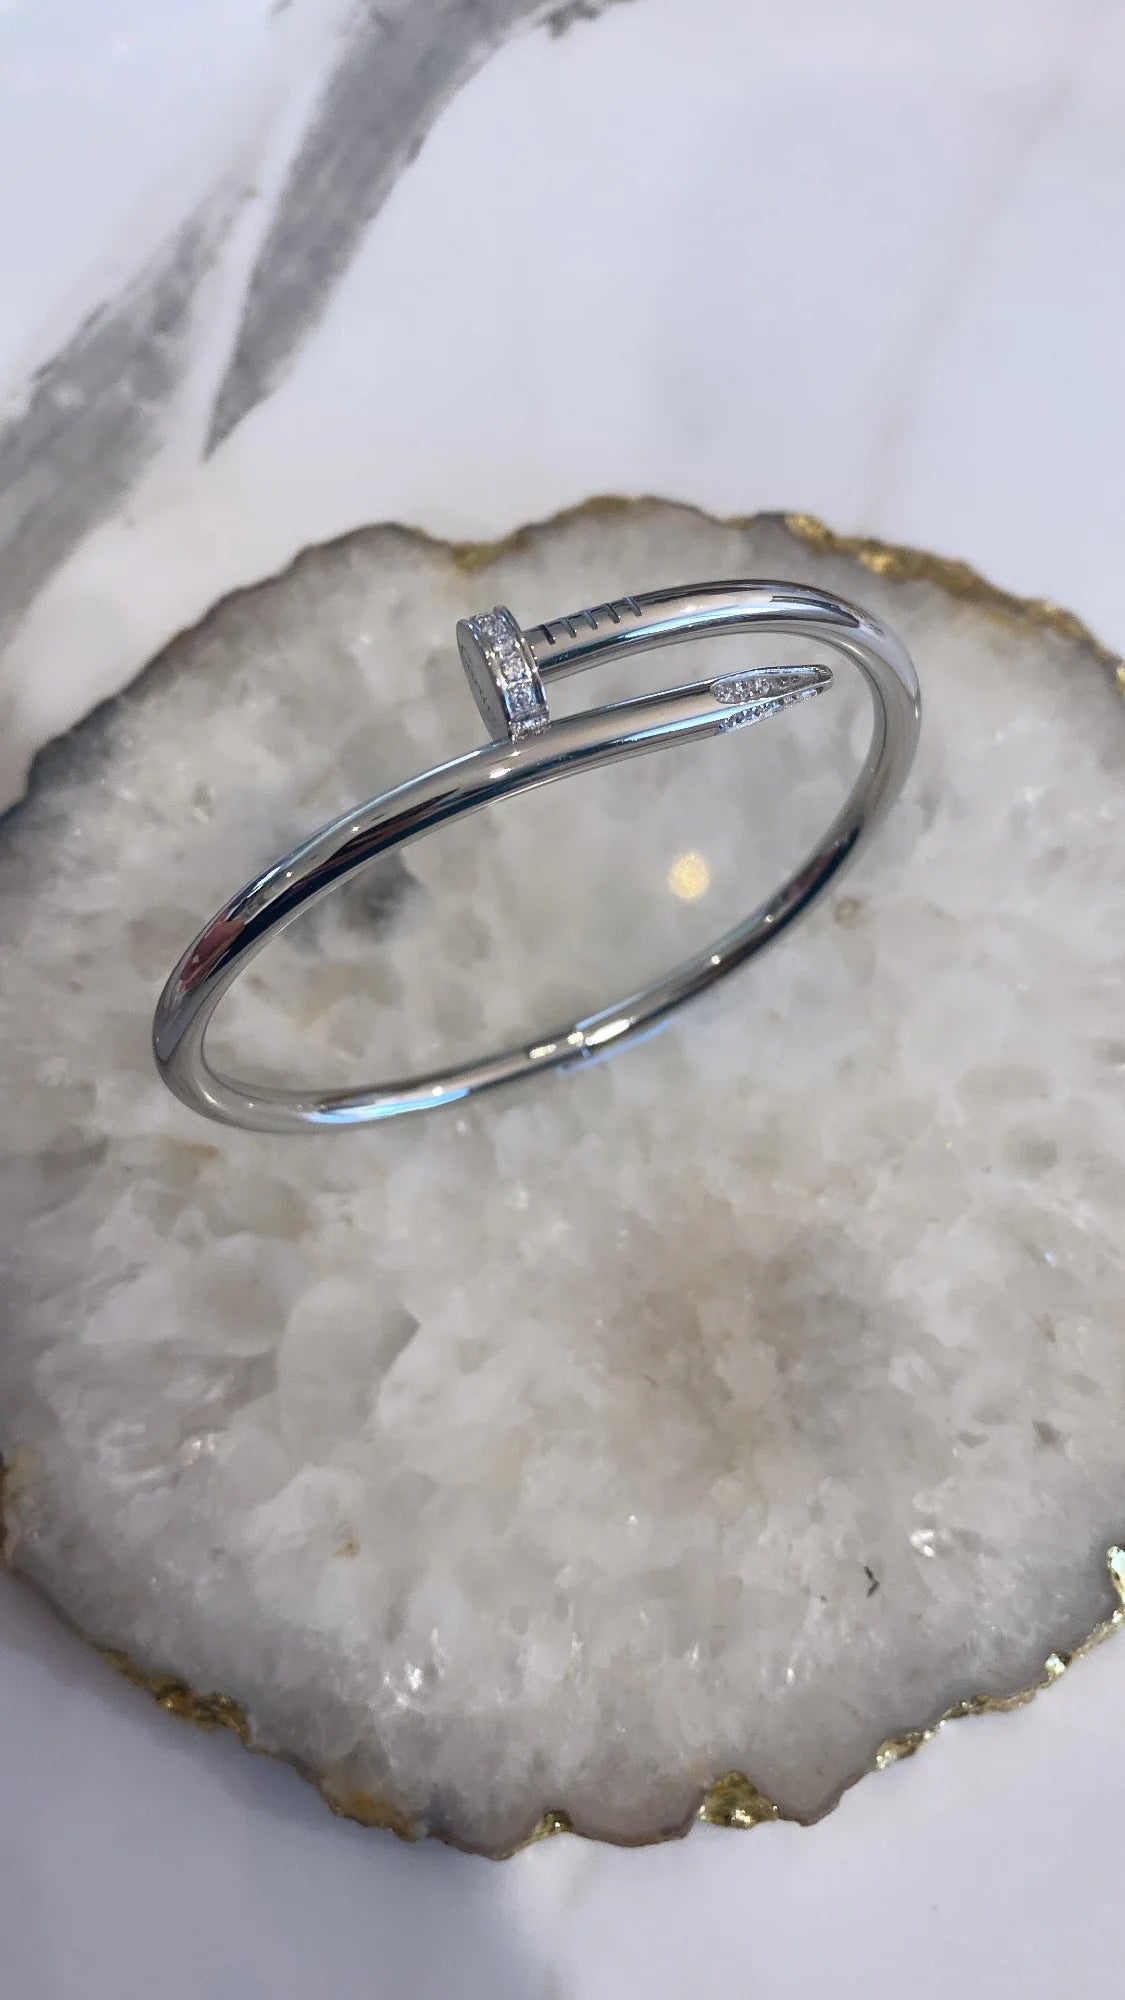 The diamond nail bracelet